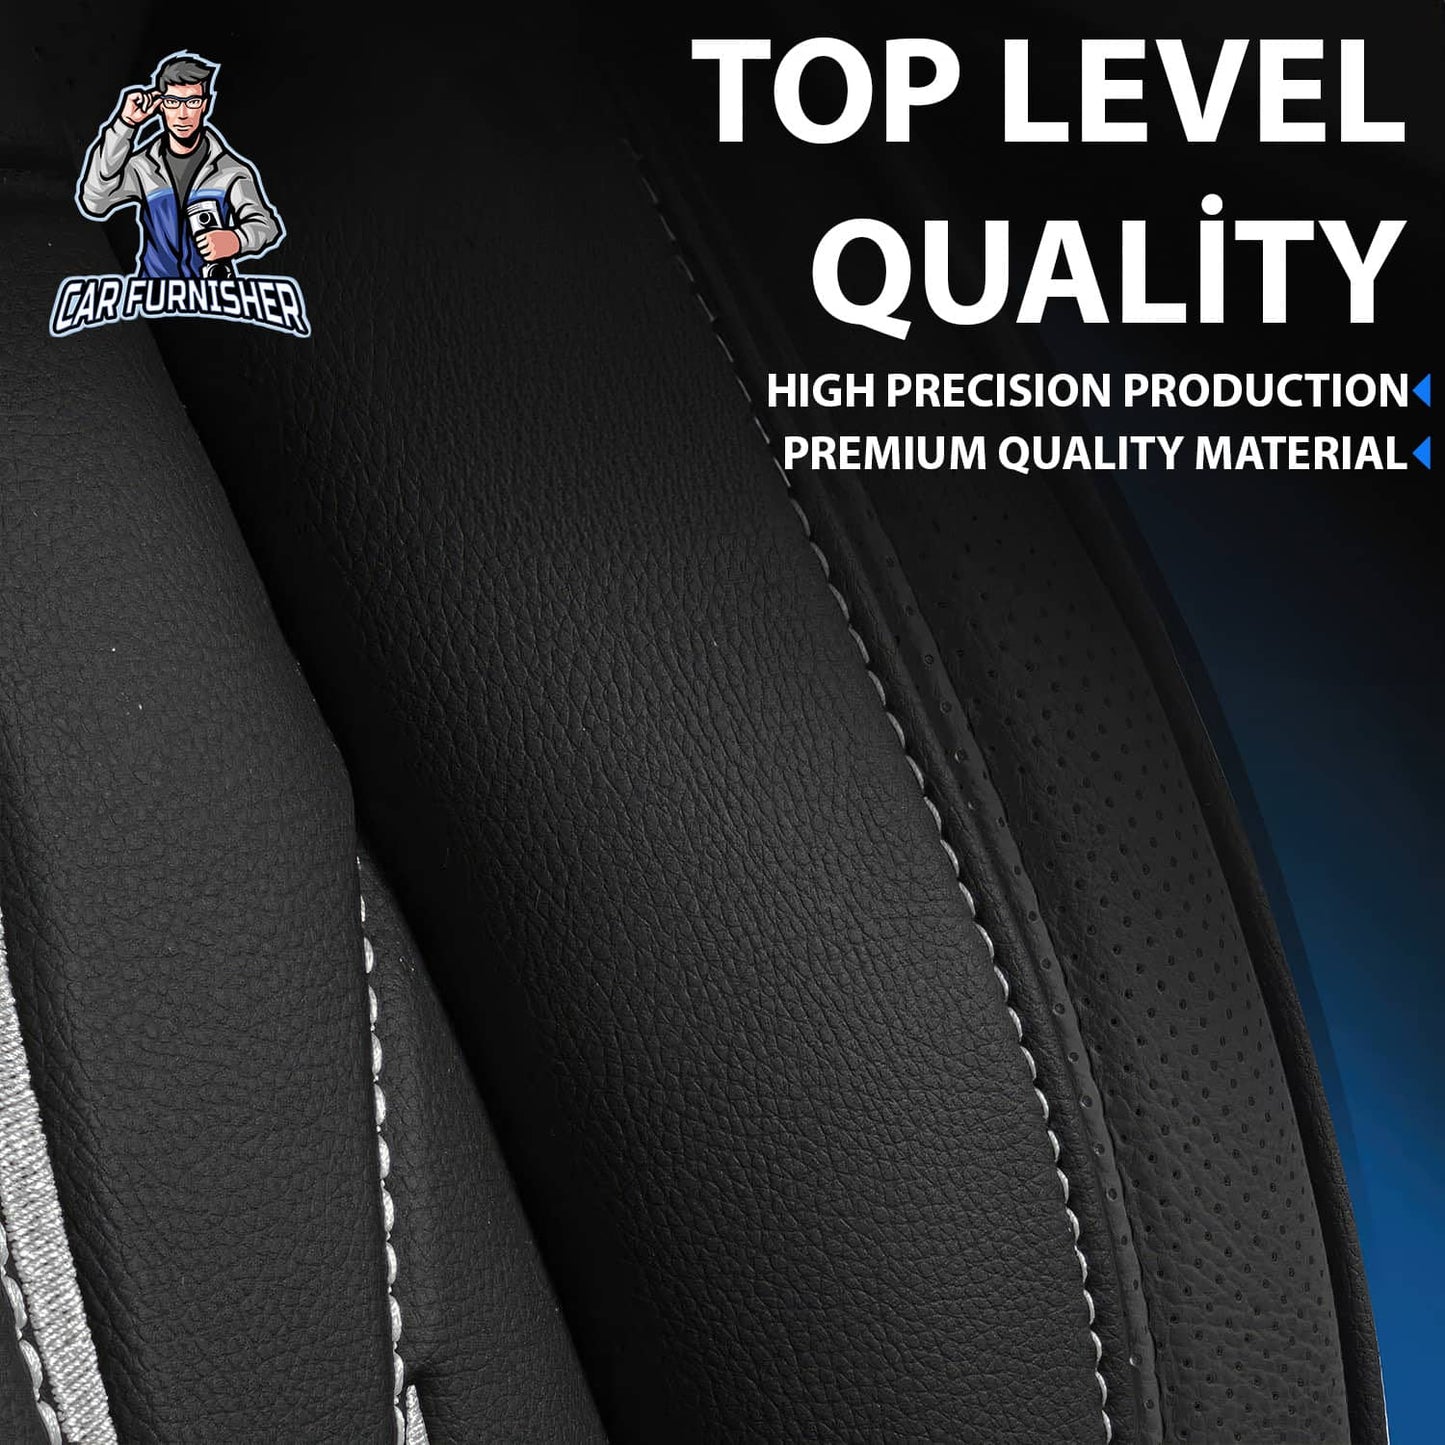 Car Seat Cover Set - Pars Design Gray 5 Seats + Headrests (Full Set) Full Leather